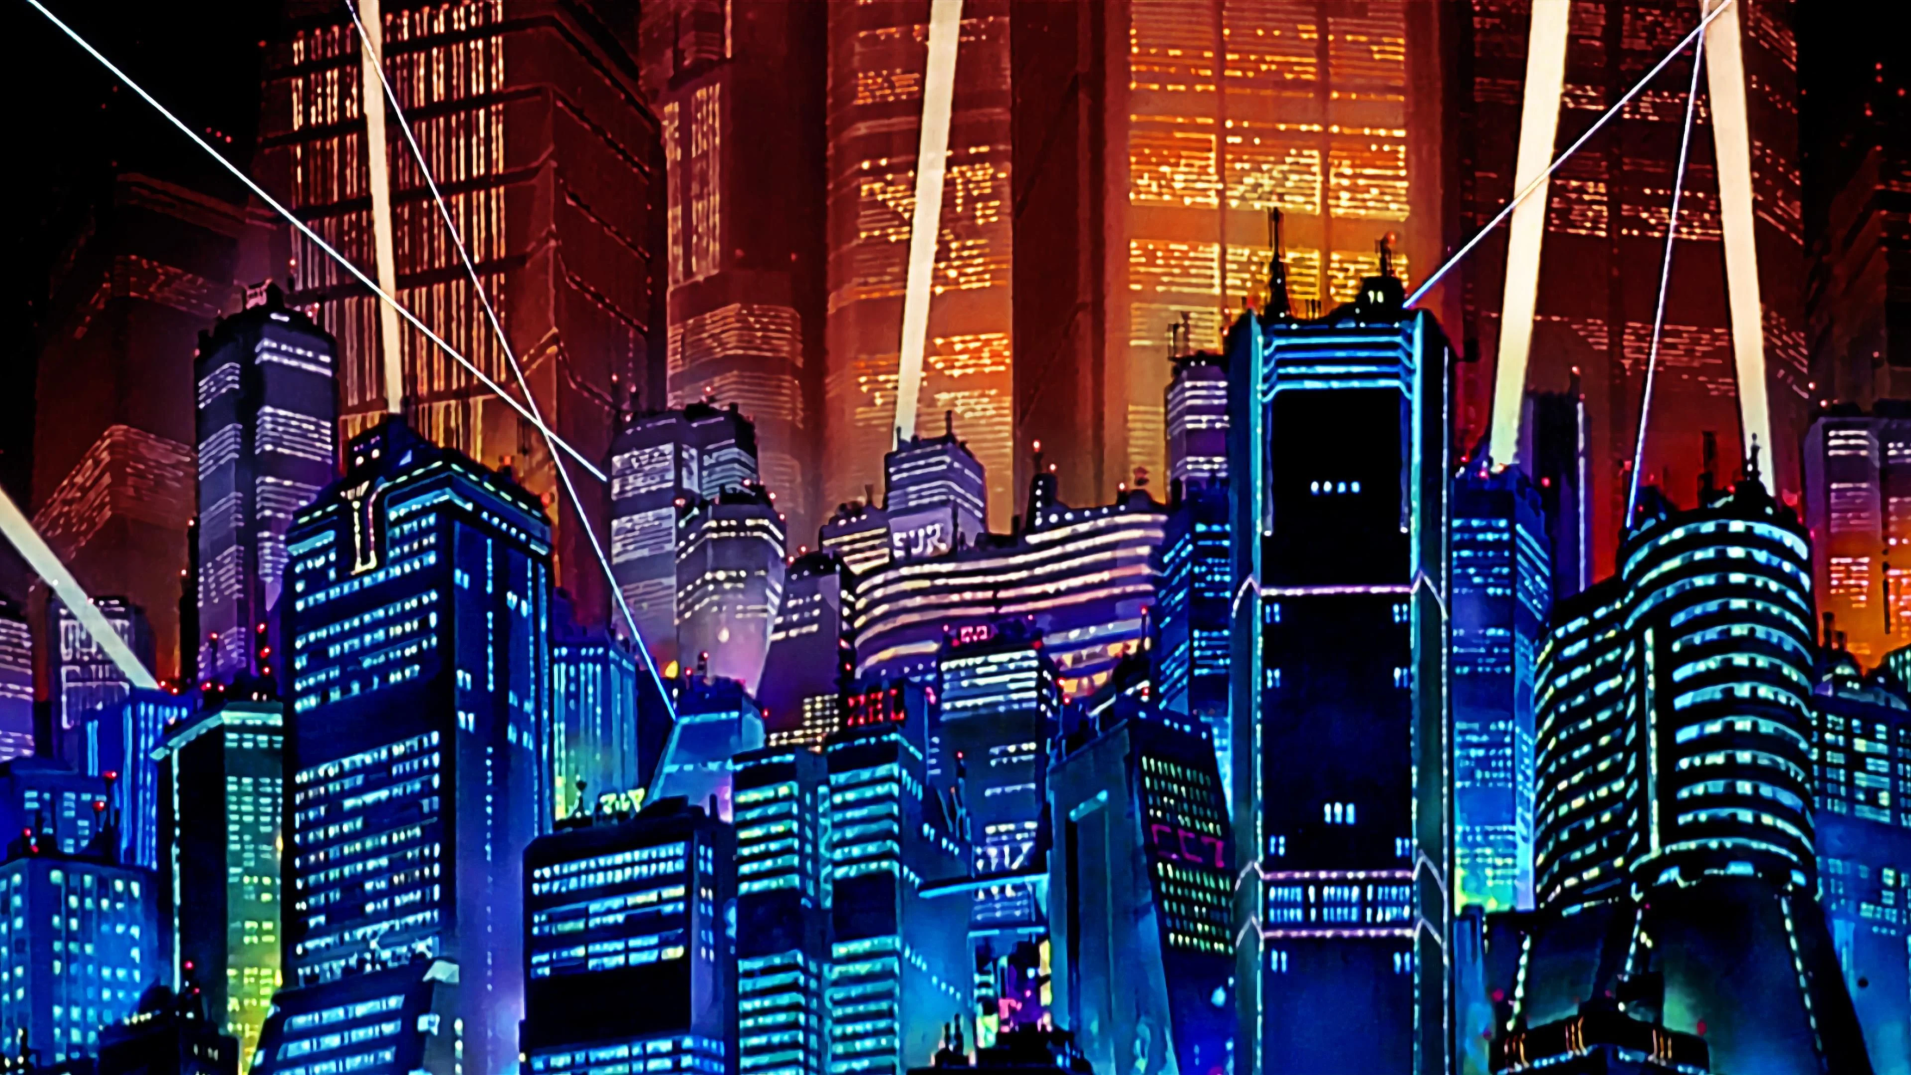 Neon city wallpaper - Gnome-look.org